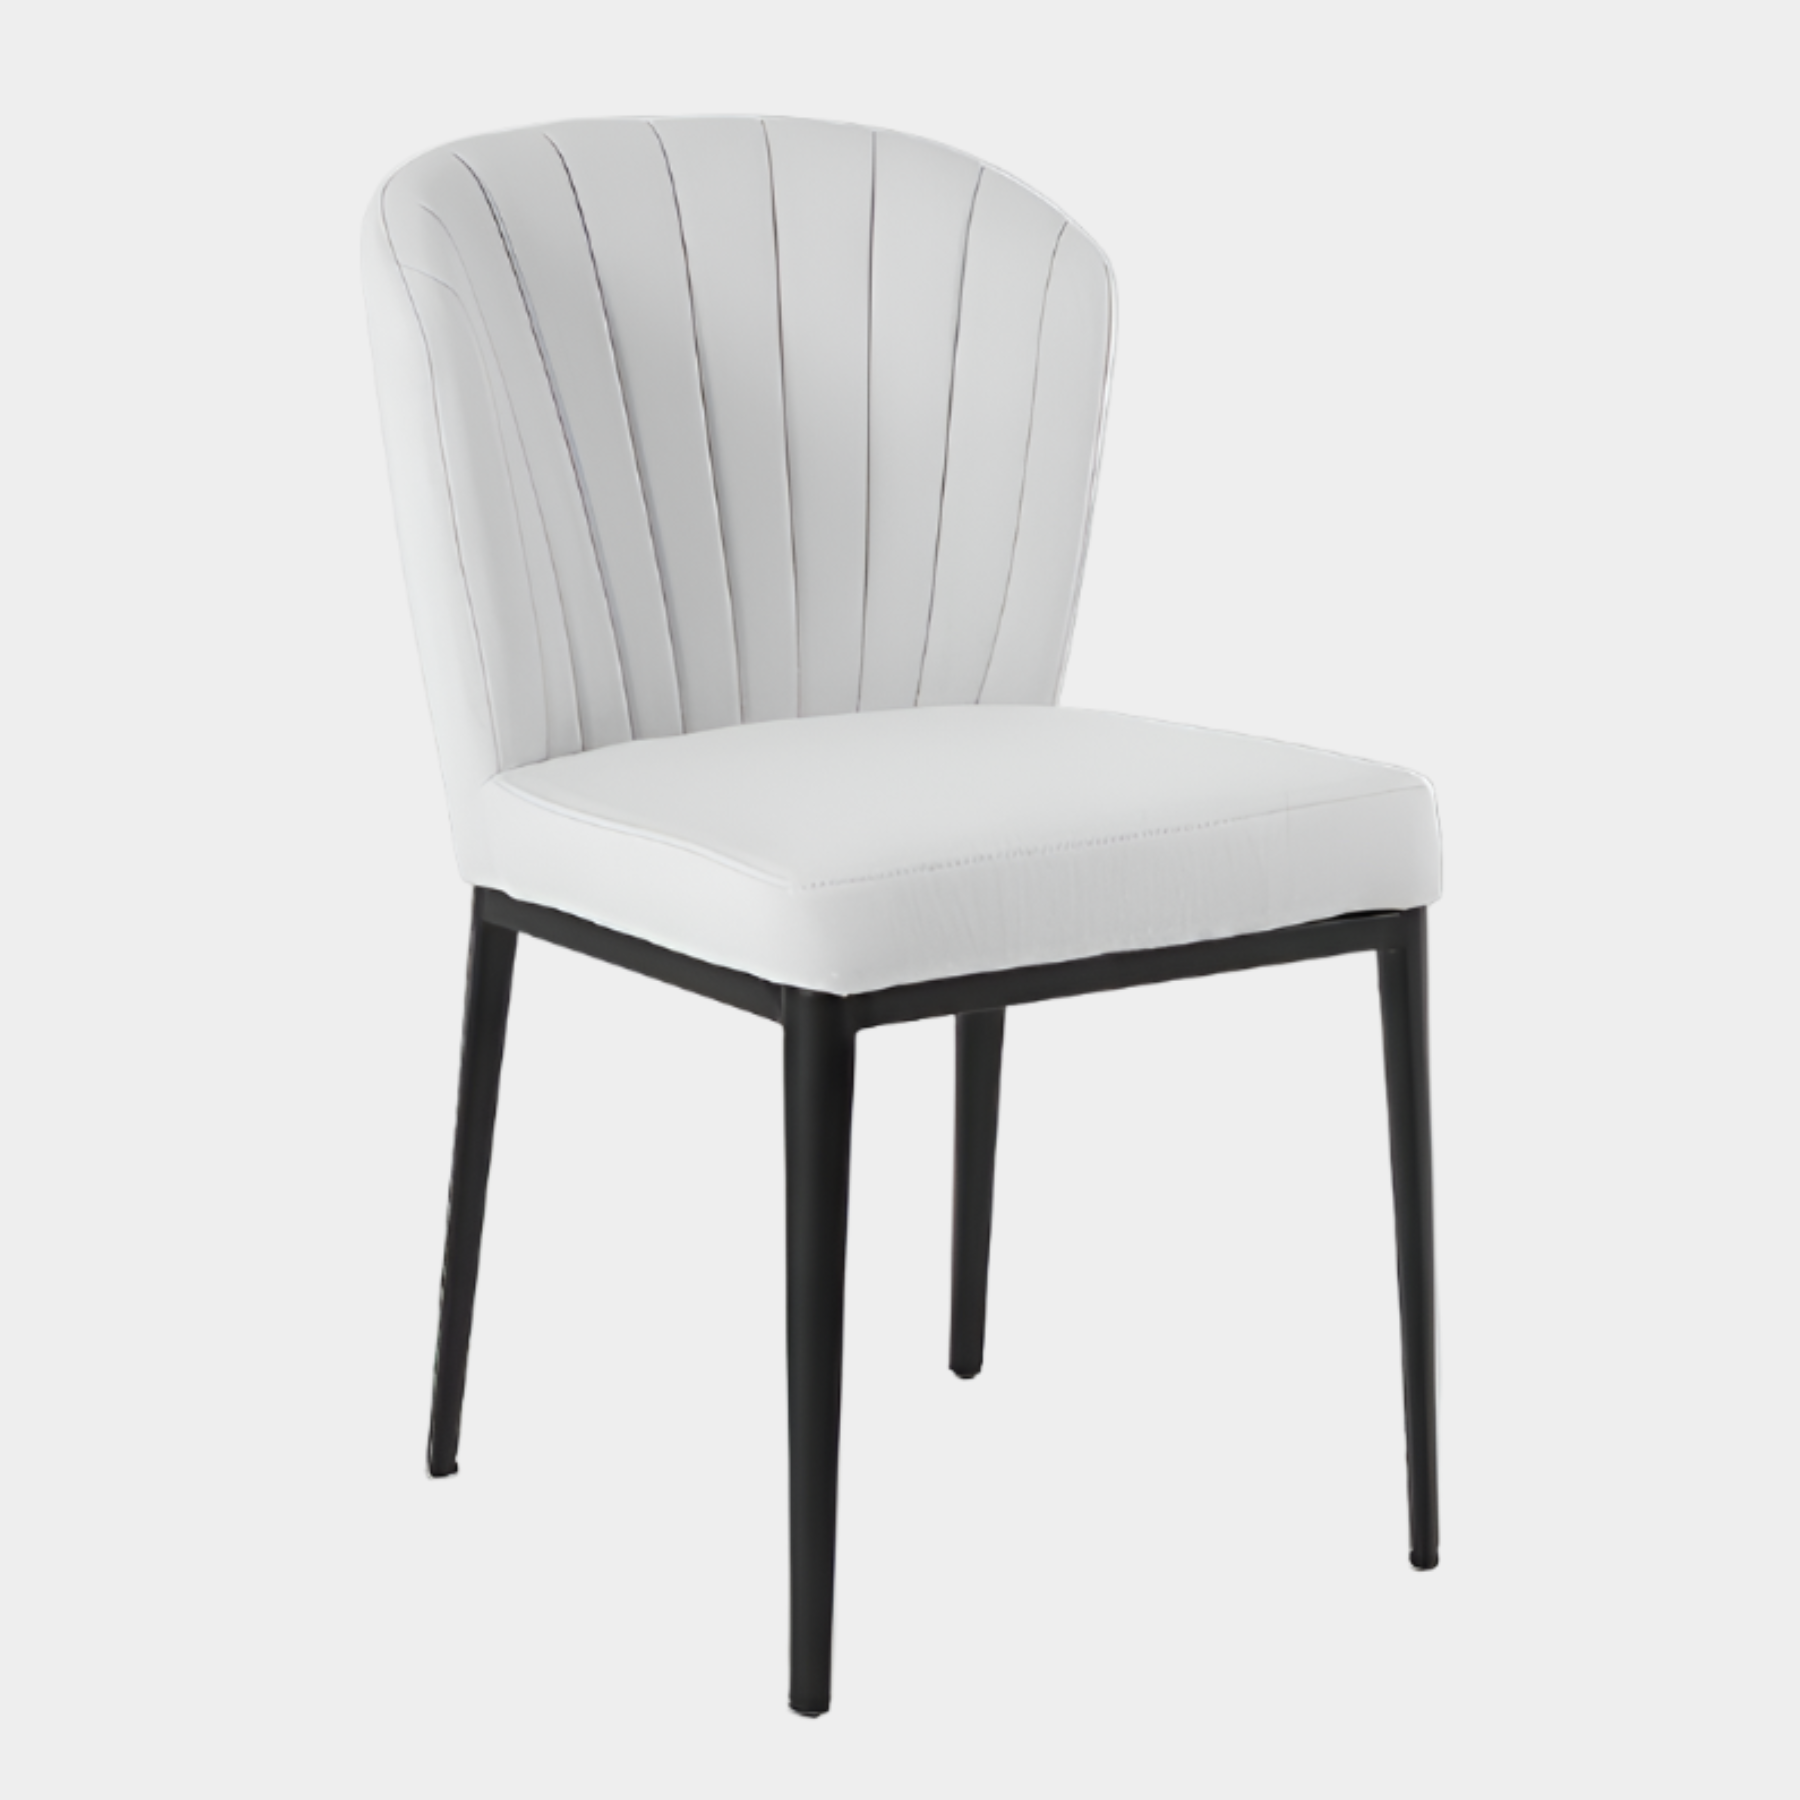 Seashell Chair - Fabric